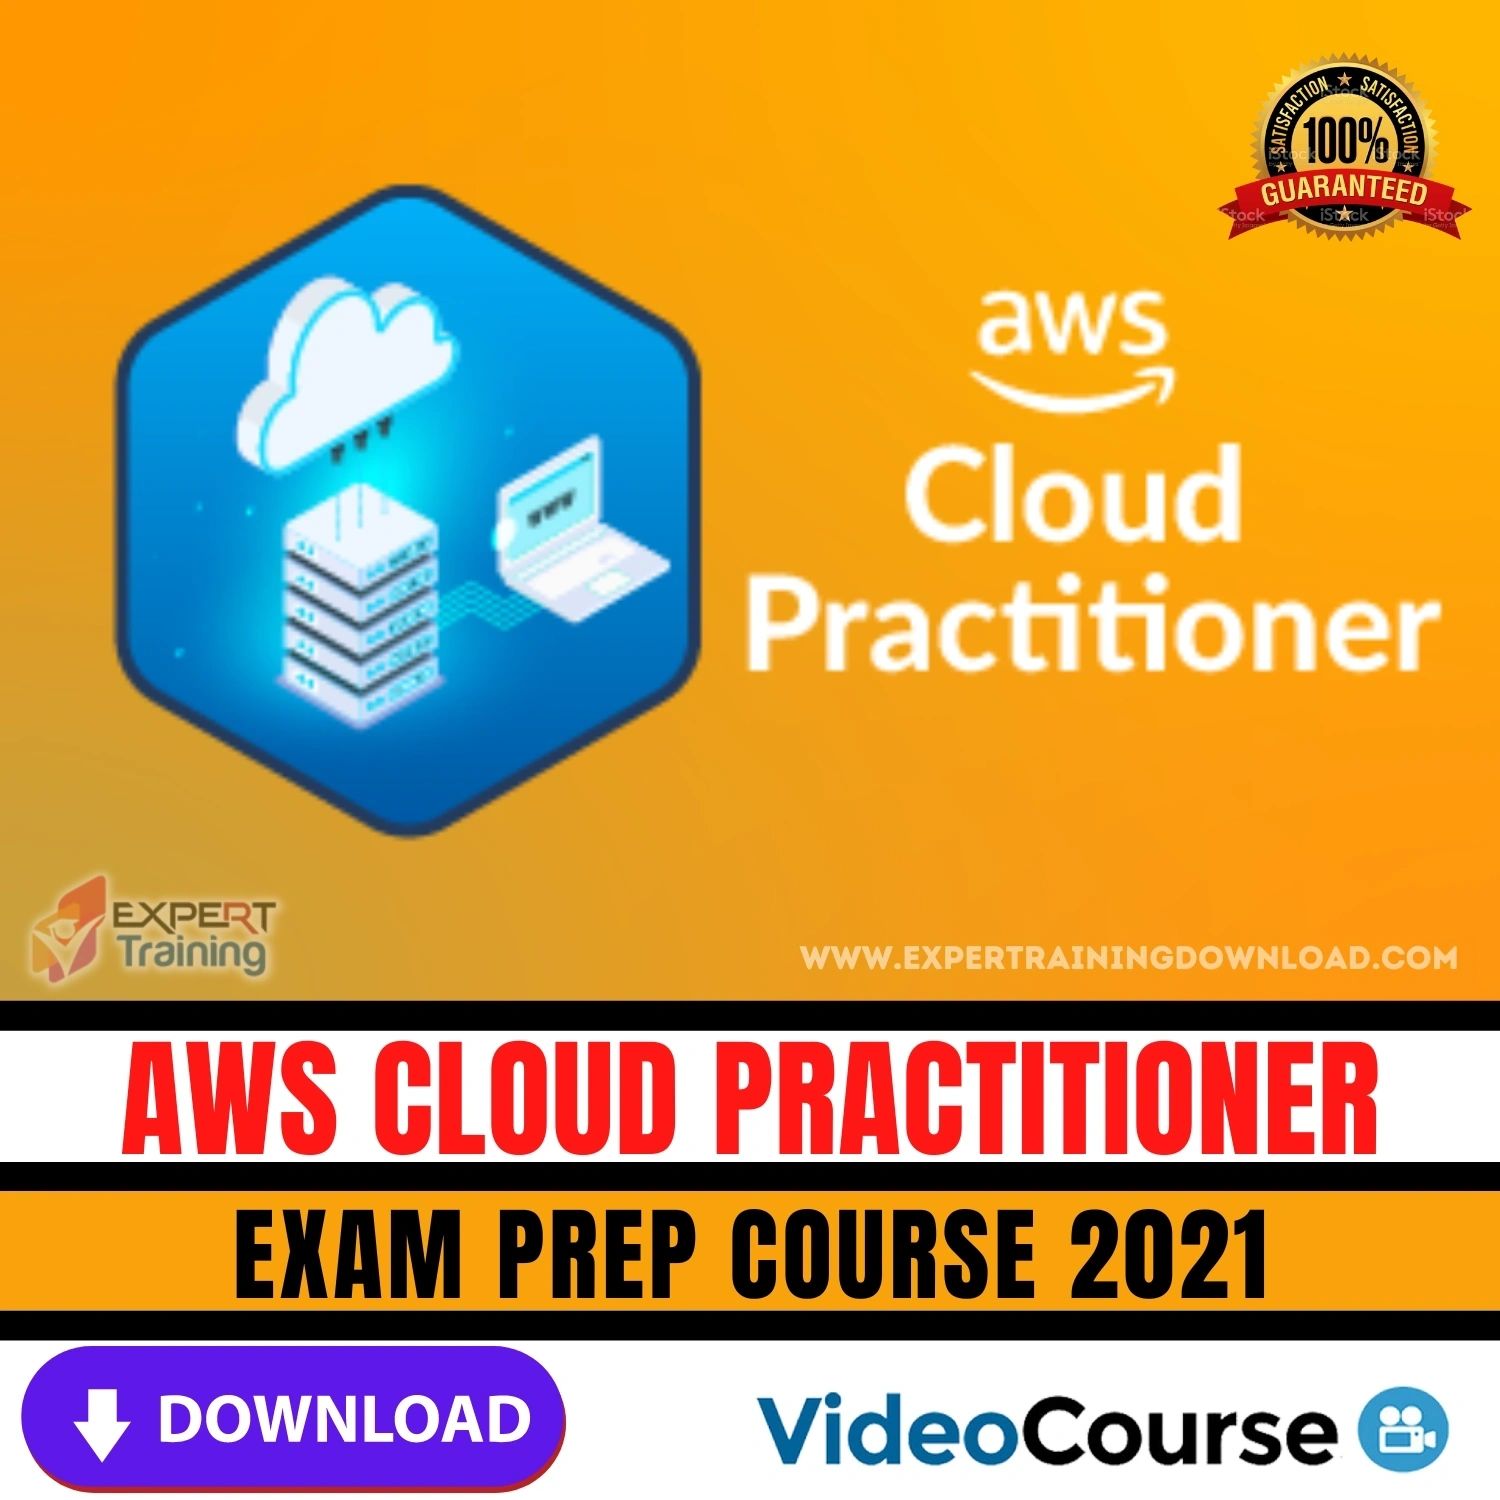 AWS Cloud Practitioner Exam Prep Course 2021